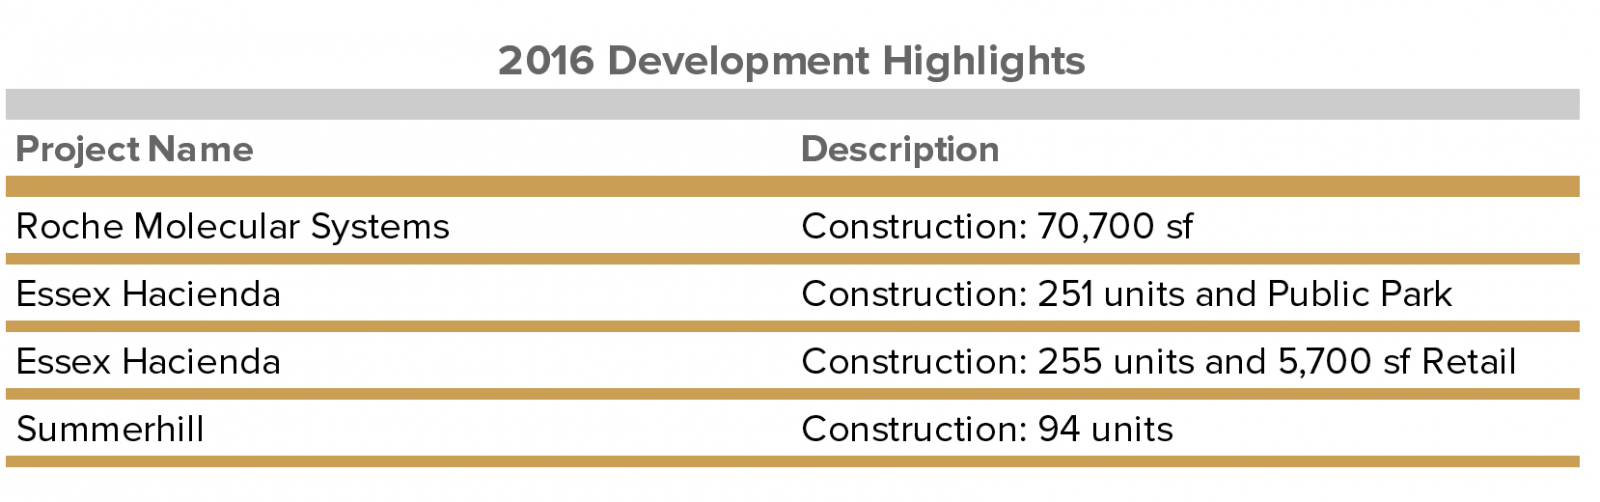 development-highlights-january-2017.png